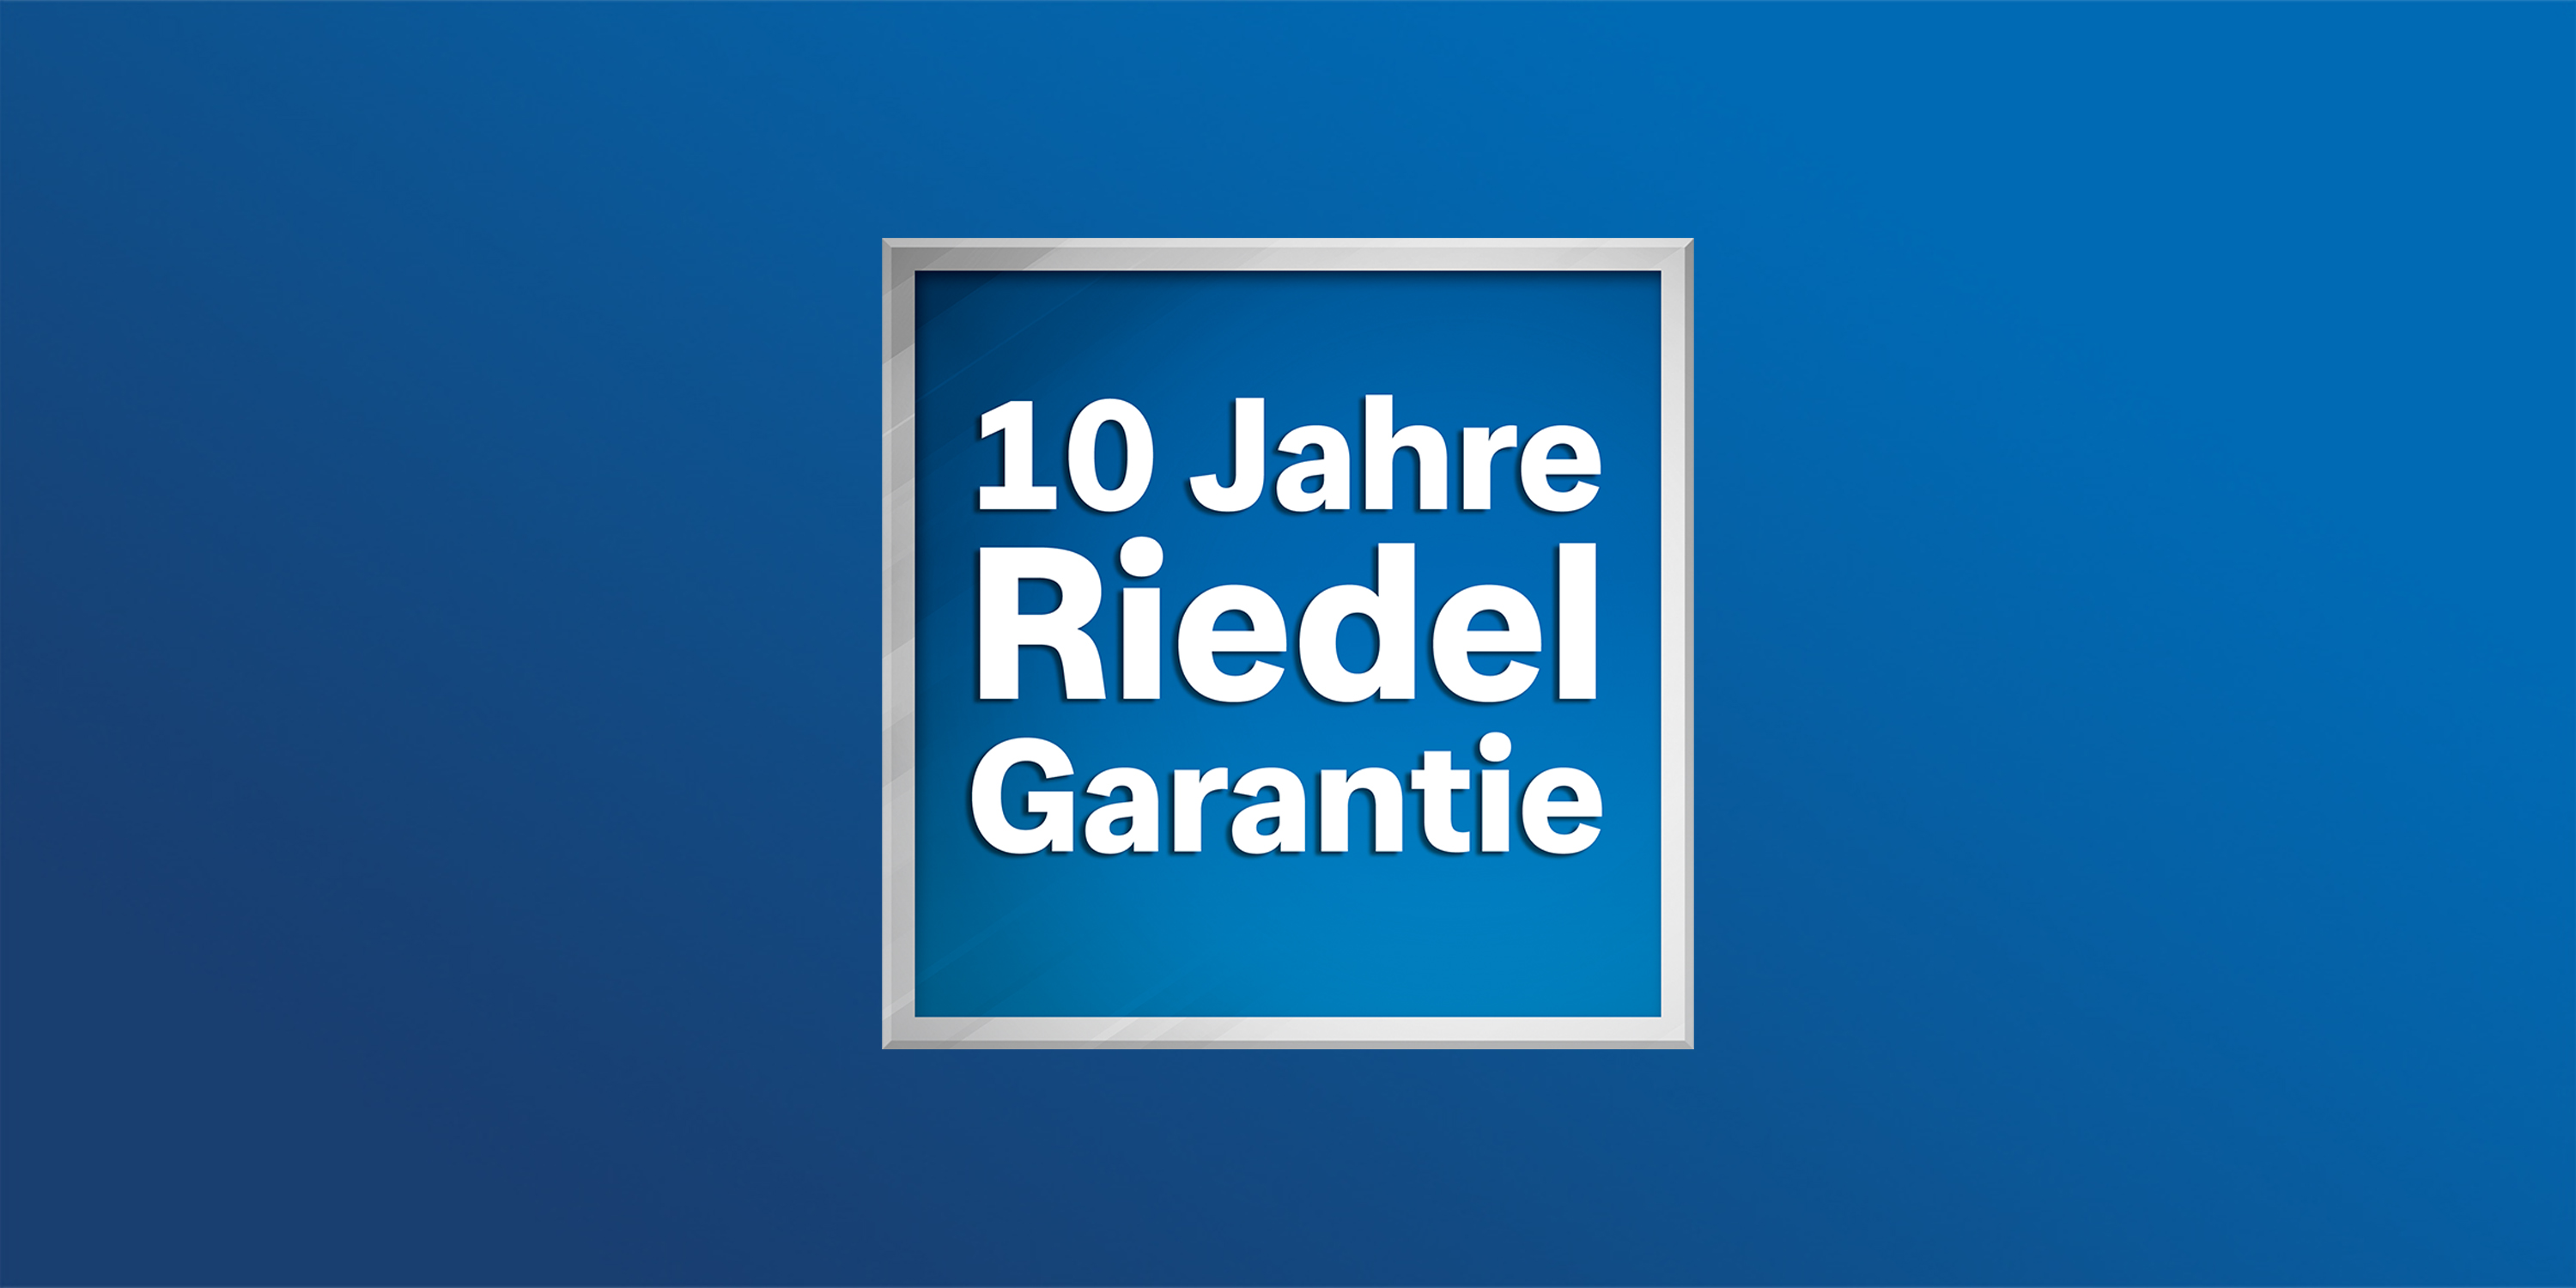 Riedel Kooling 10 Jahre Riedel Garantie bester Service Bild